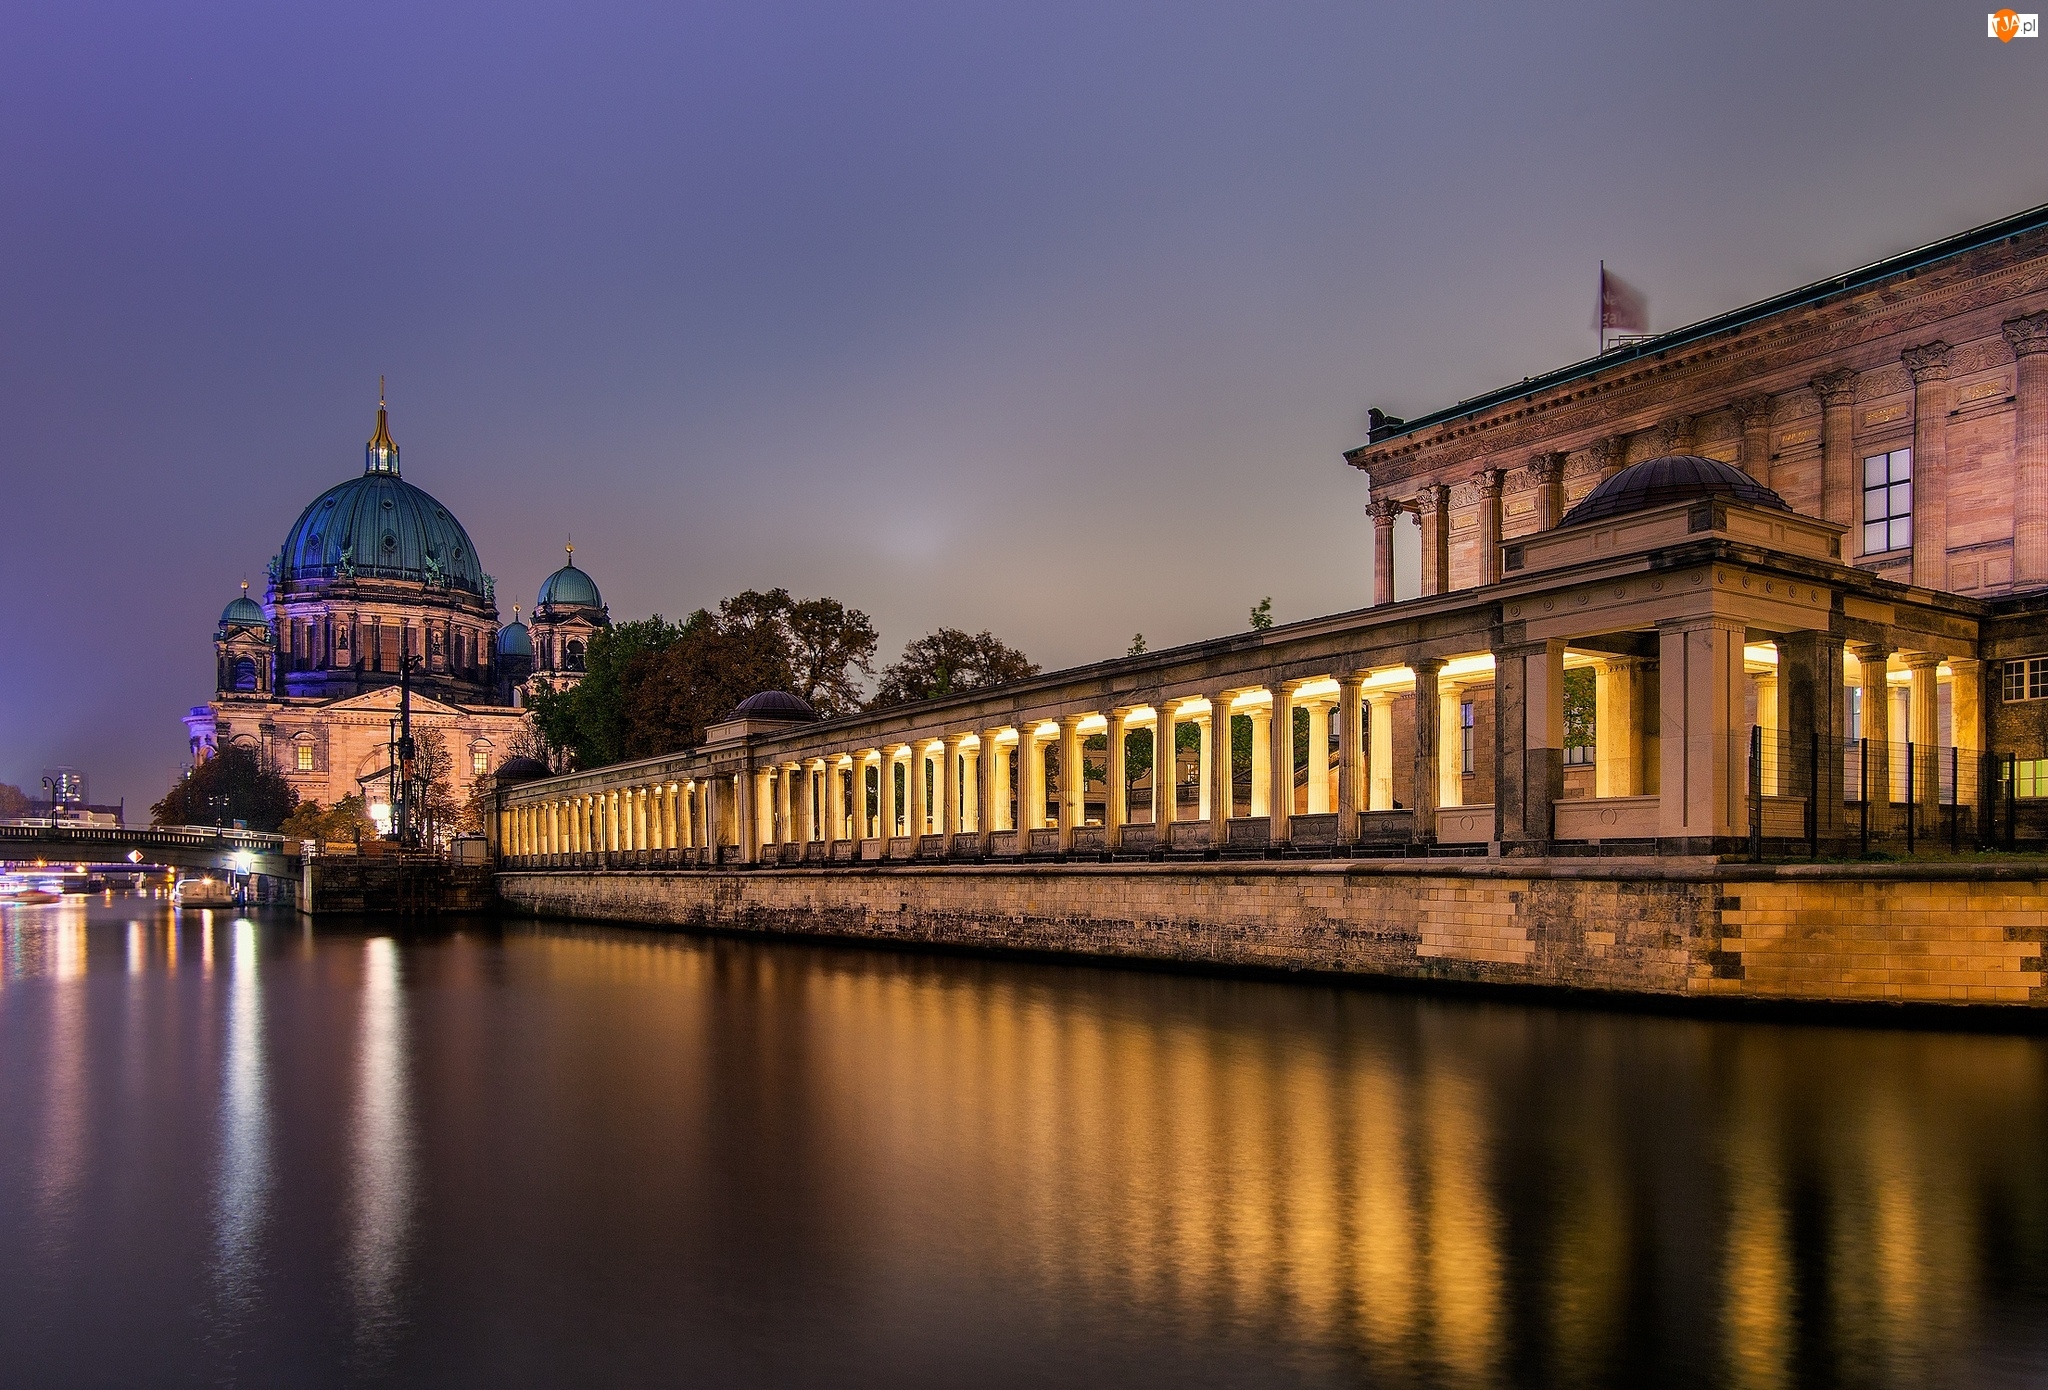 Katedra, Berlin, Niemcy